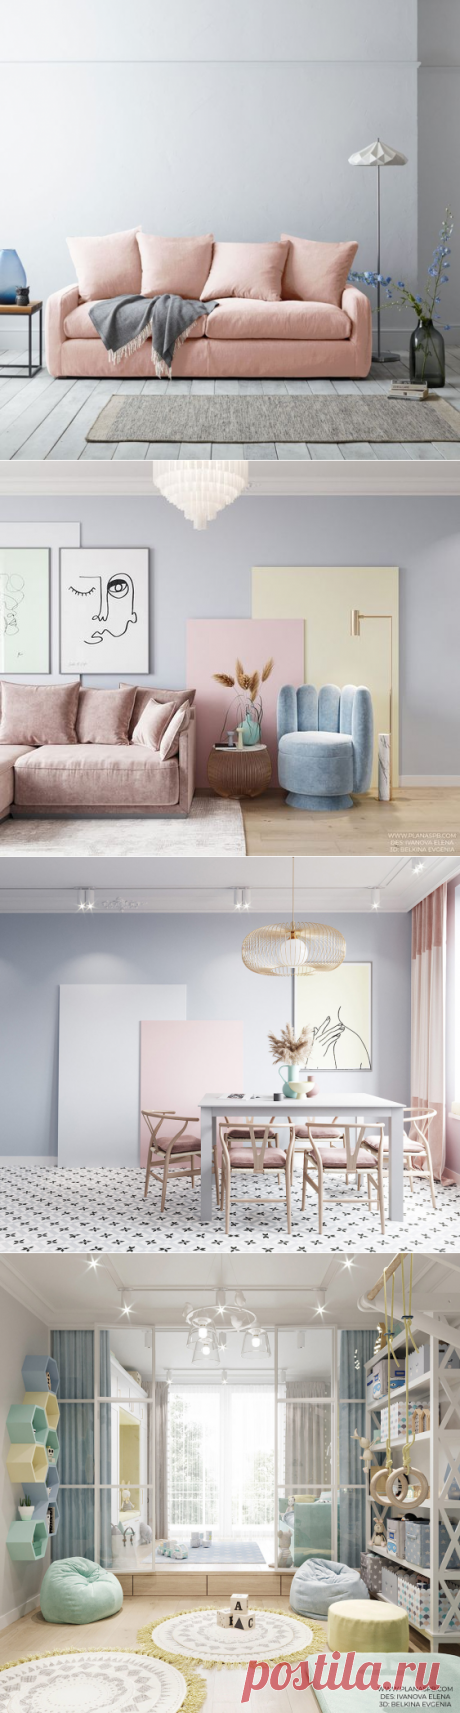 Sweet and Minimalist Pastel Interior Décor Ideas - Home Design Ideas